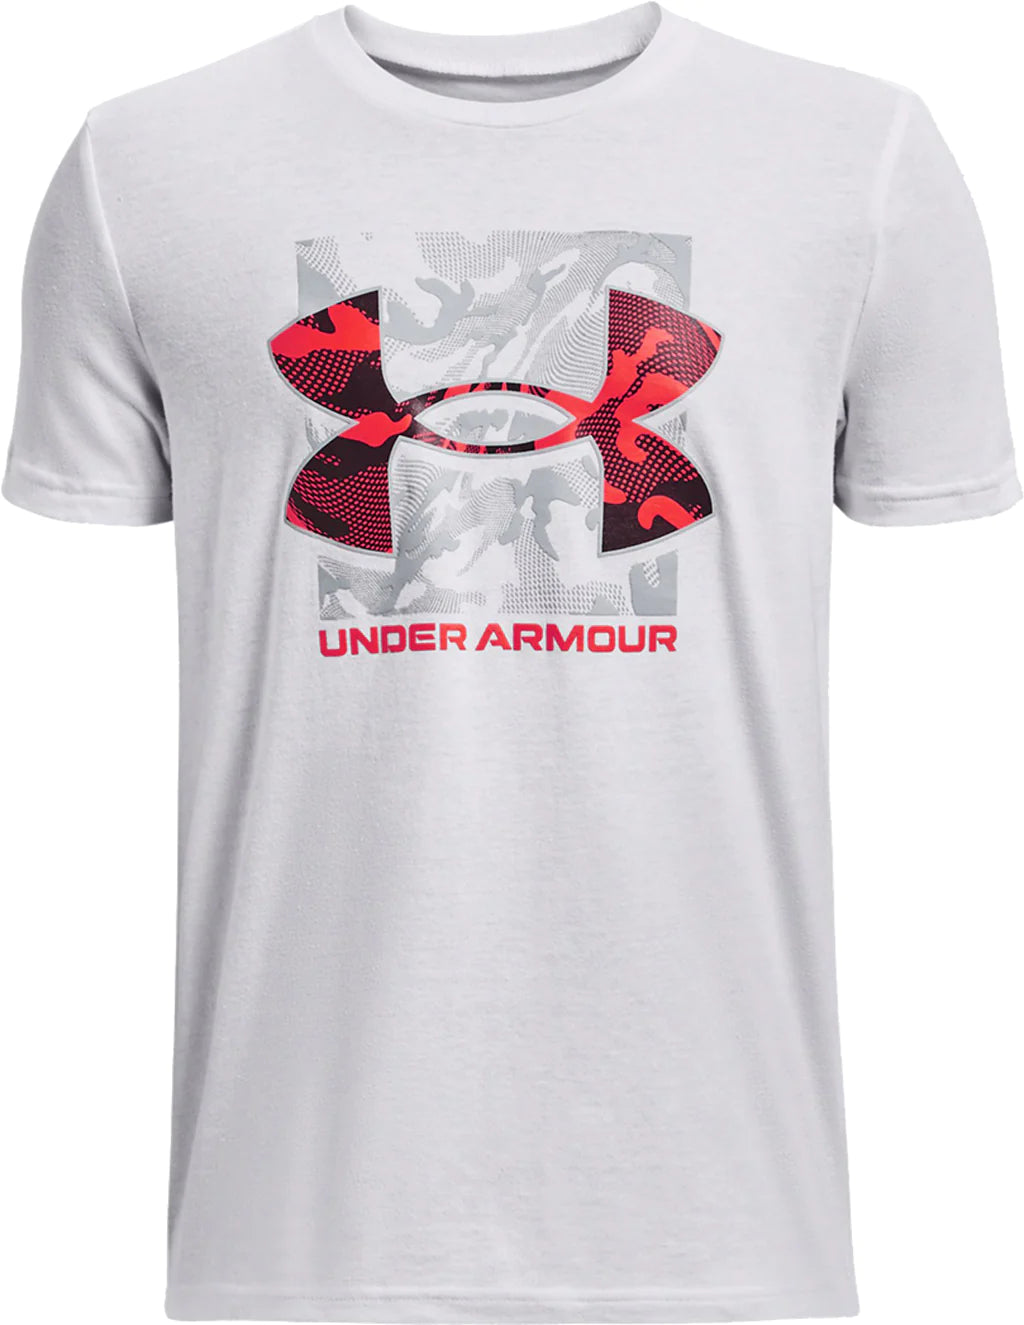 Under Armour Box Logo Camo Short Sleeve Youth